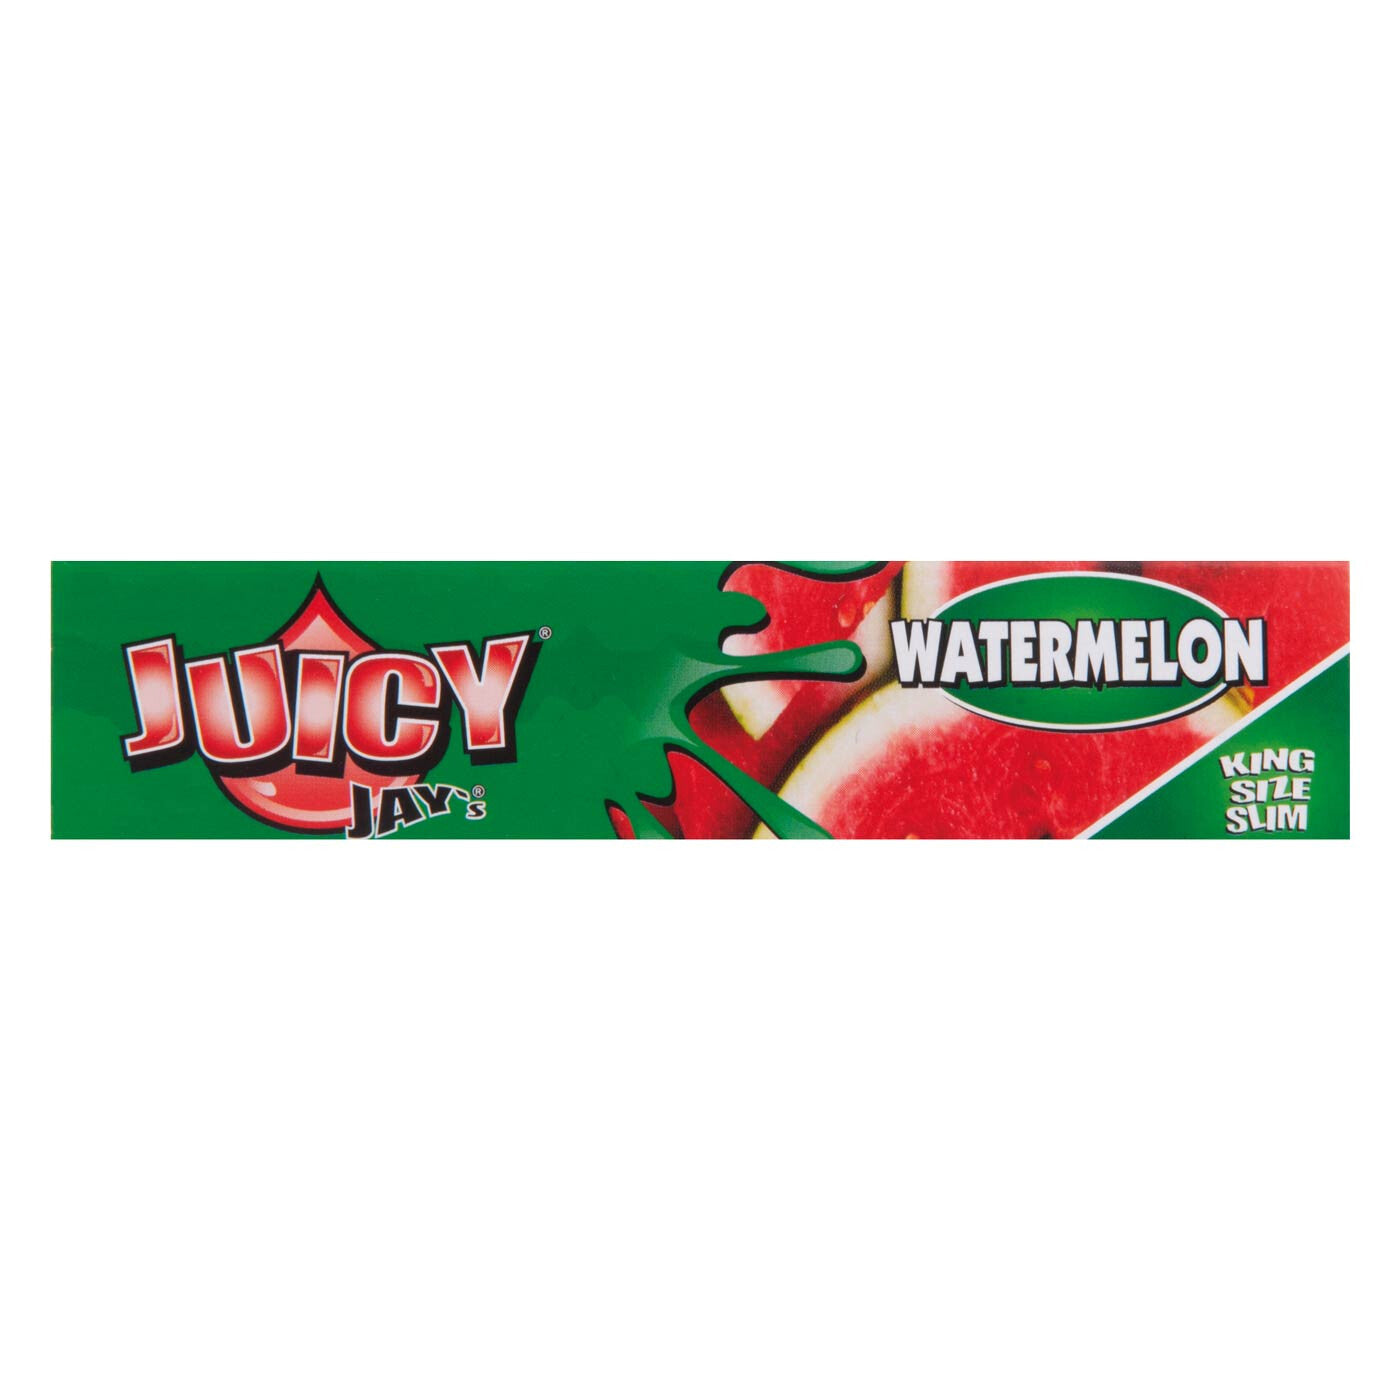 Juicy Jays Watermelon Kss 1 PC voorkant